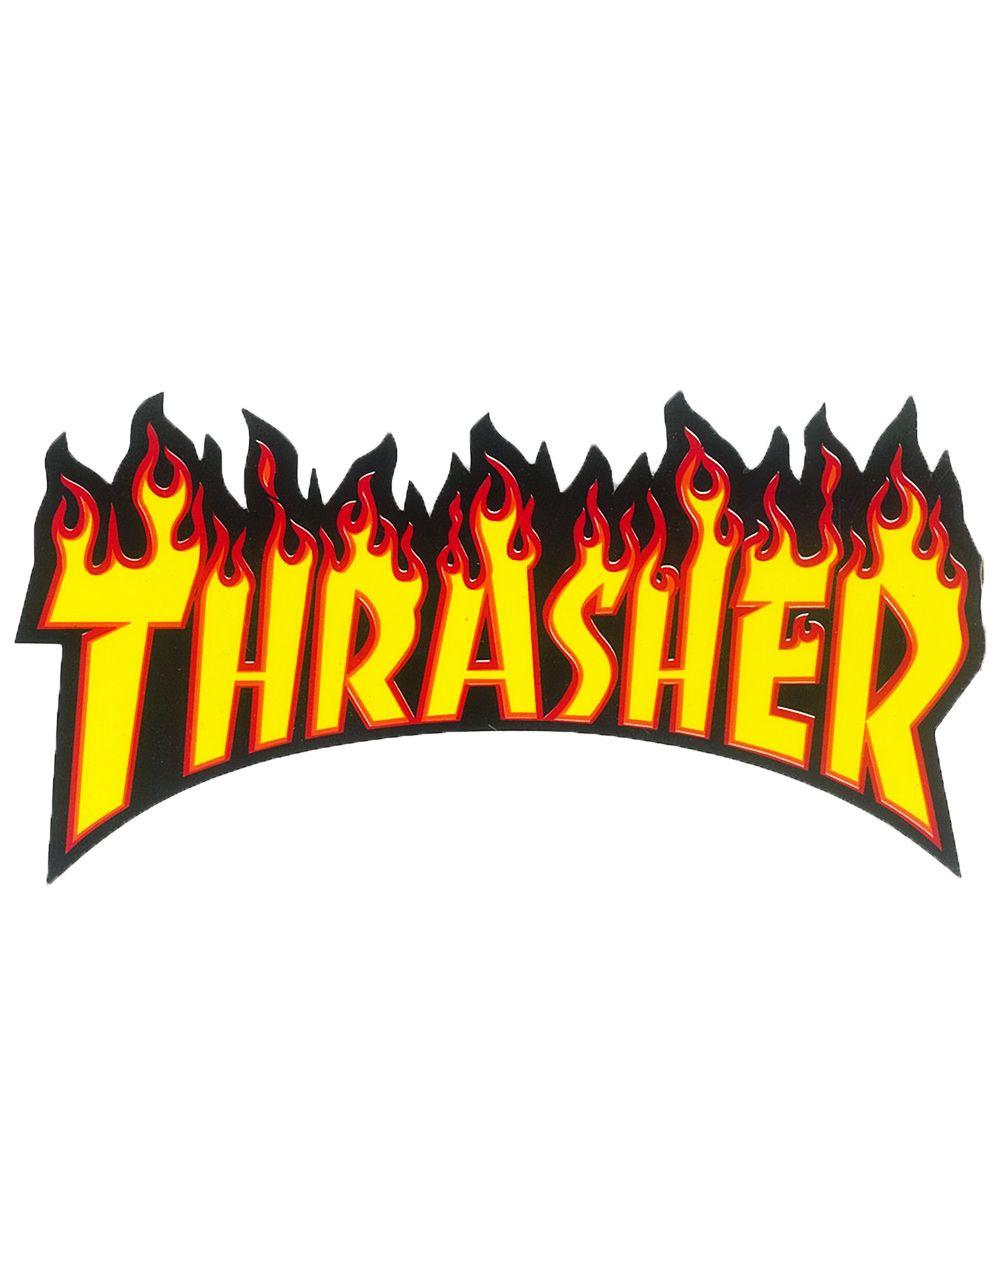 search?q=thrasher logo